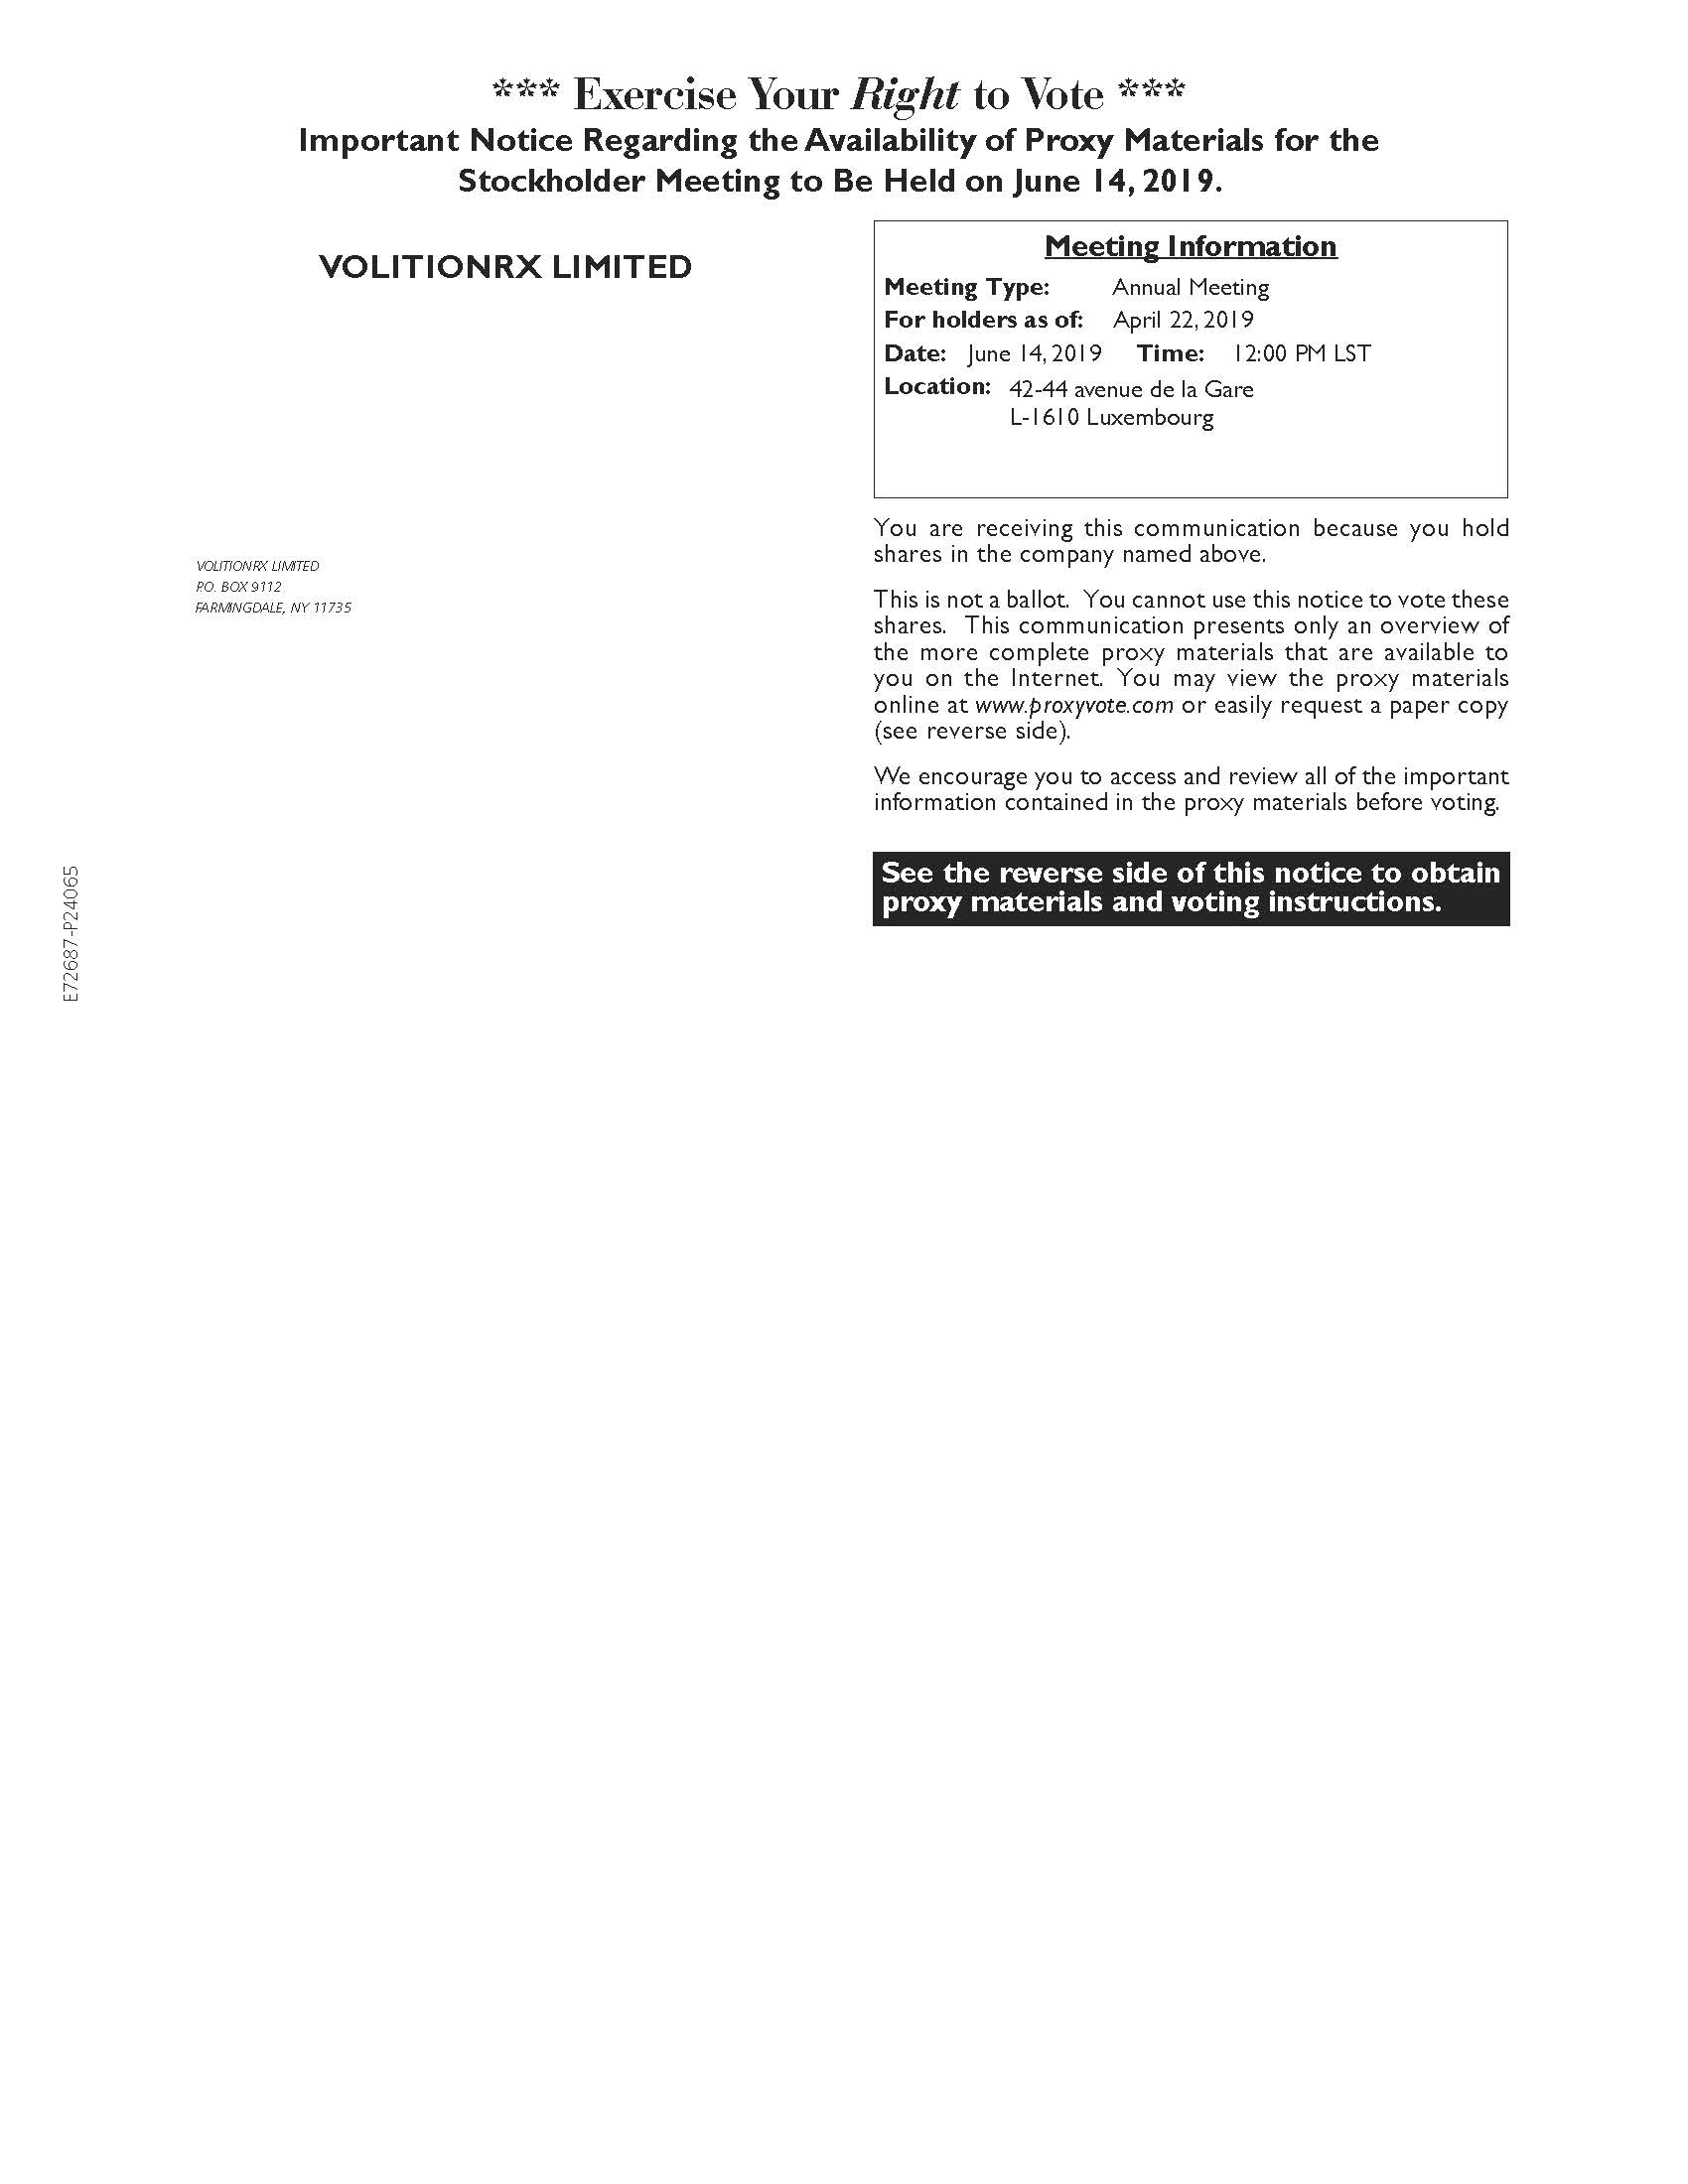 VOLITIONRX - 2019 Final Notice Card 4845-9842-4725 v1_Page_1.jpg